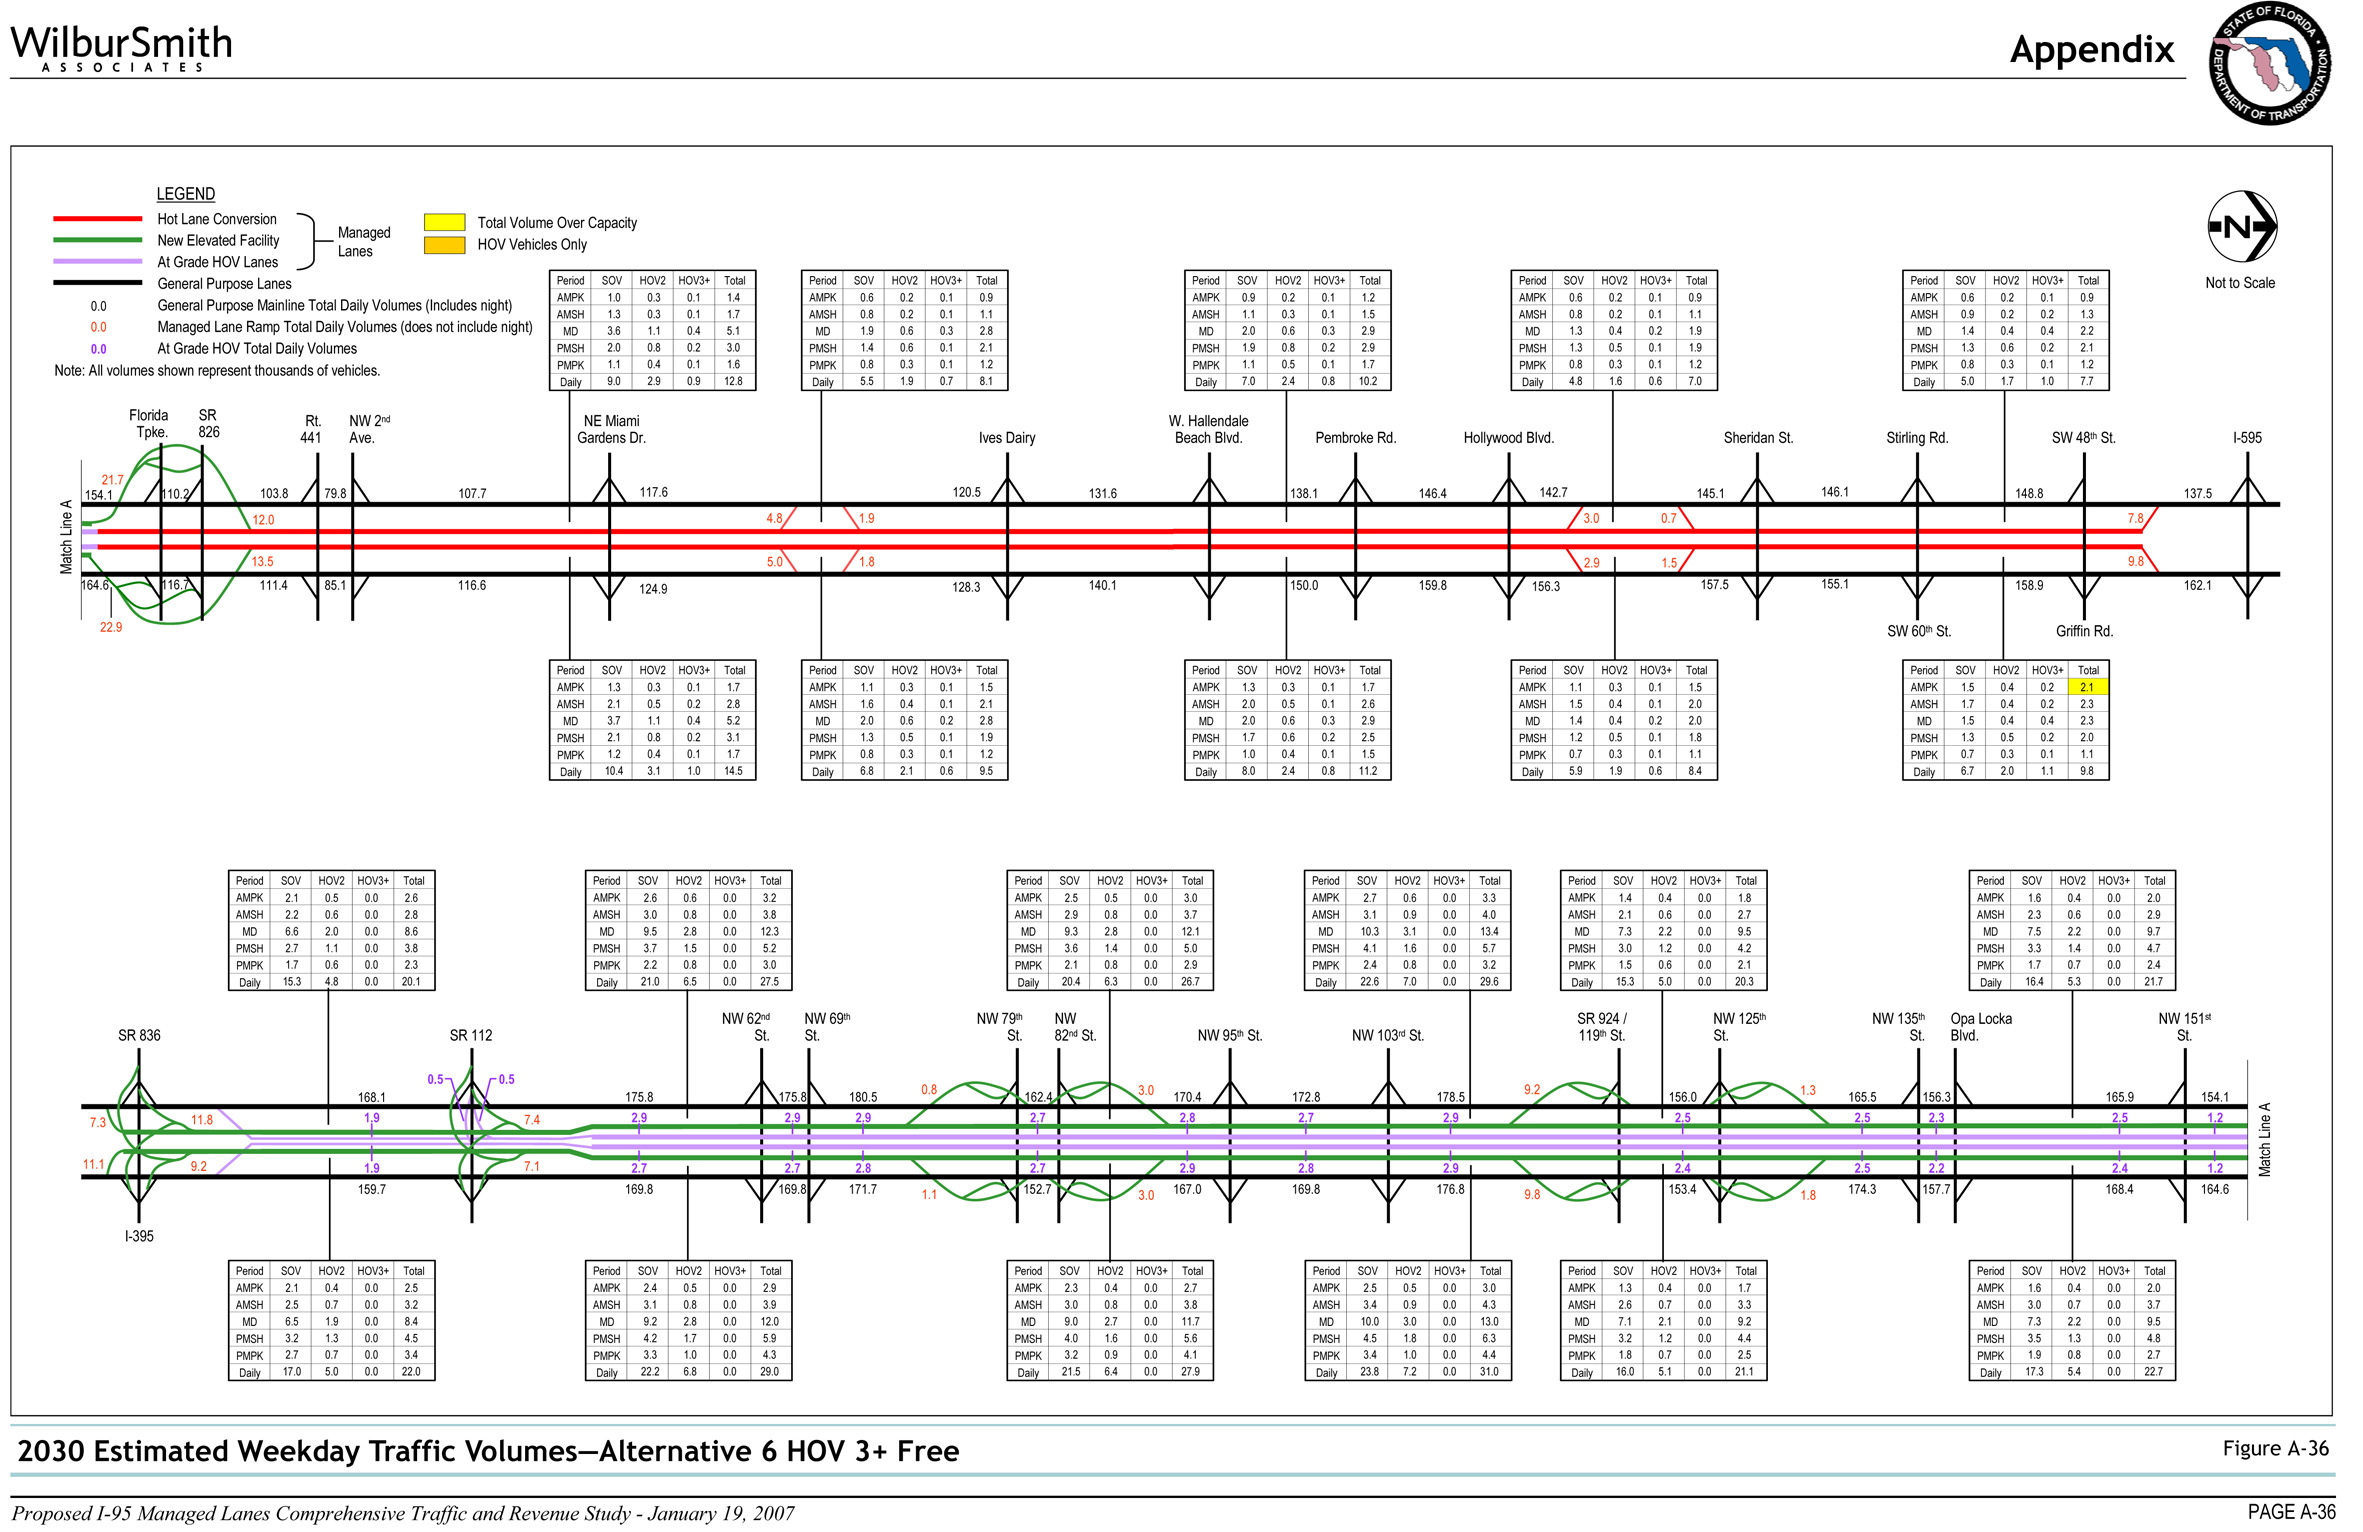 Figure A-36 2030 Estimated Weekday Traffic Volumes - Alternative 6 HOV 3+ Free